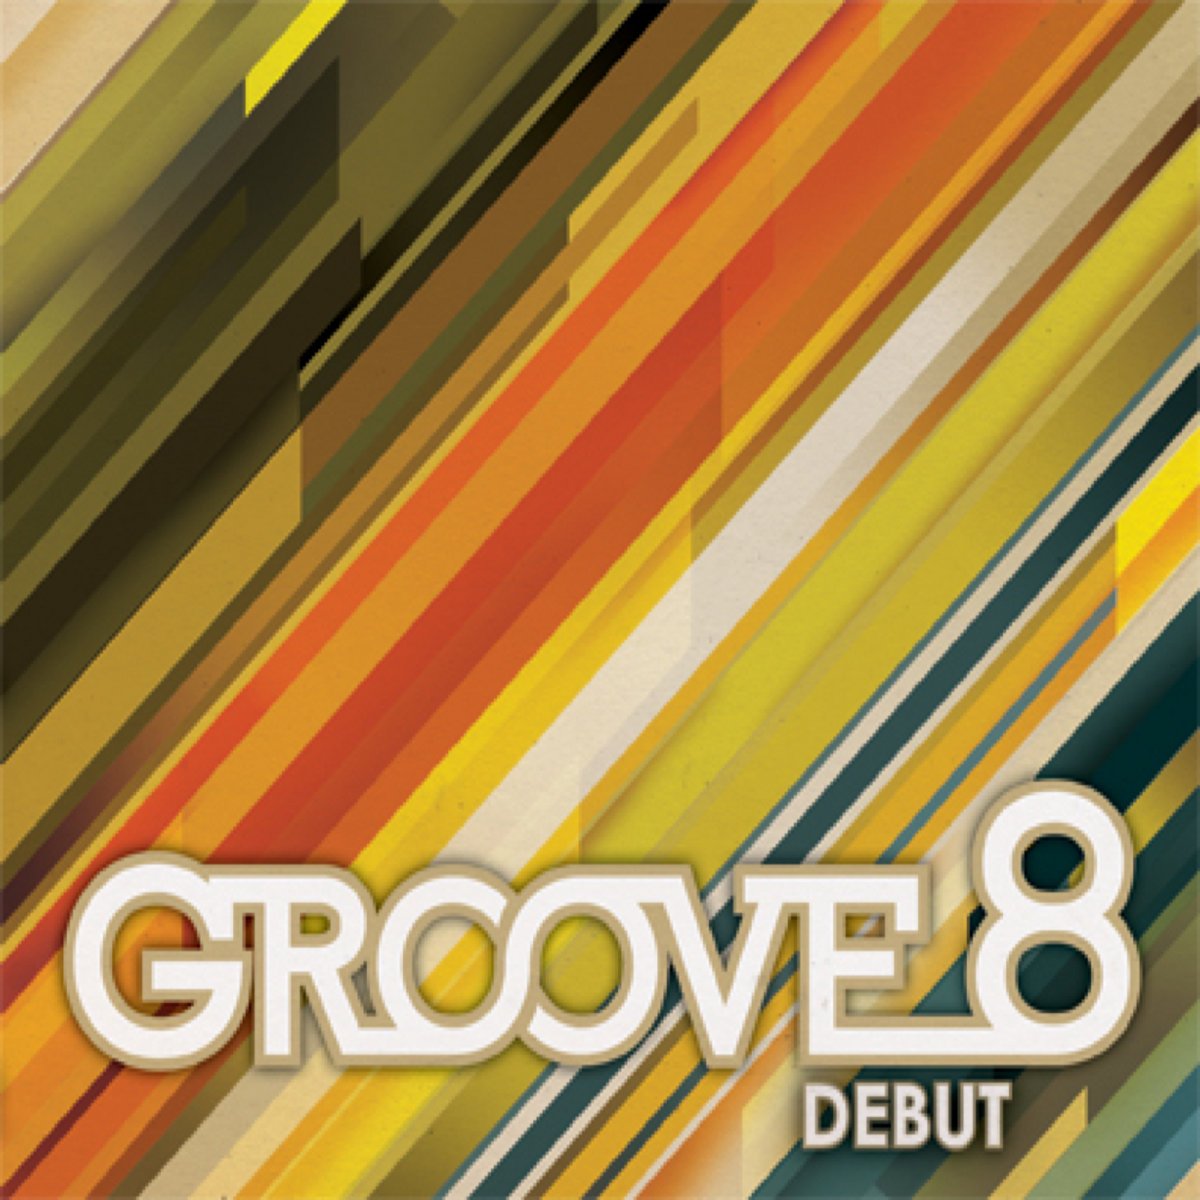 Groove 8 Debut.jpeg